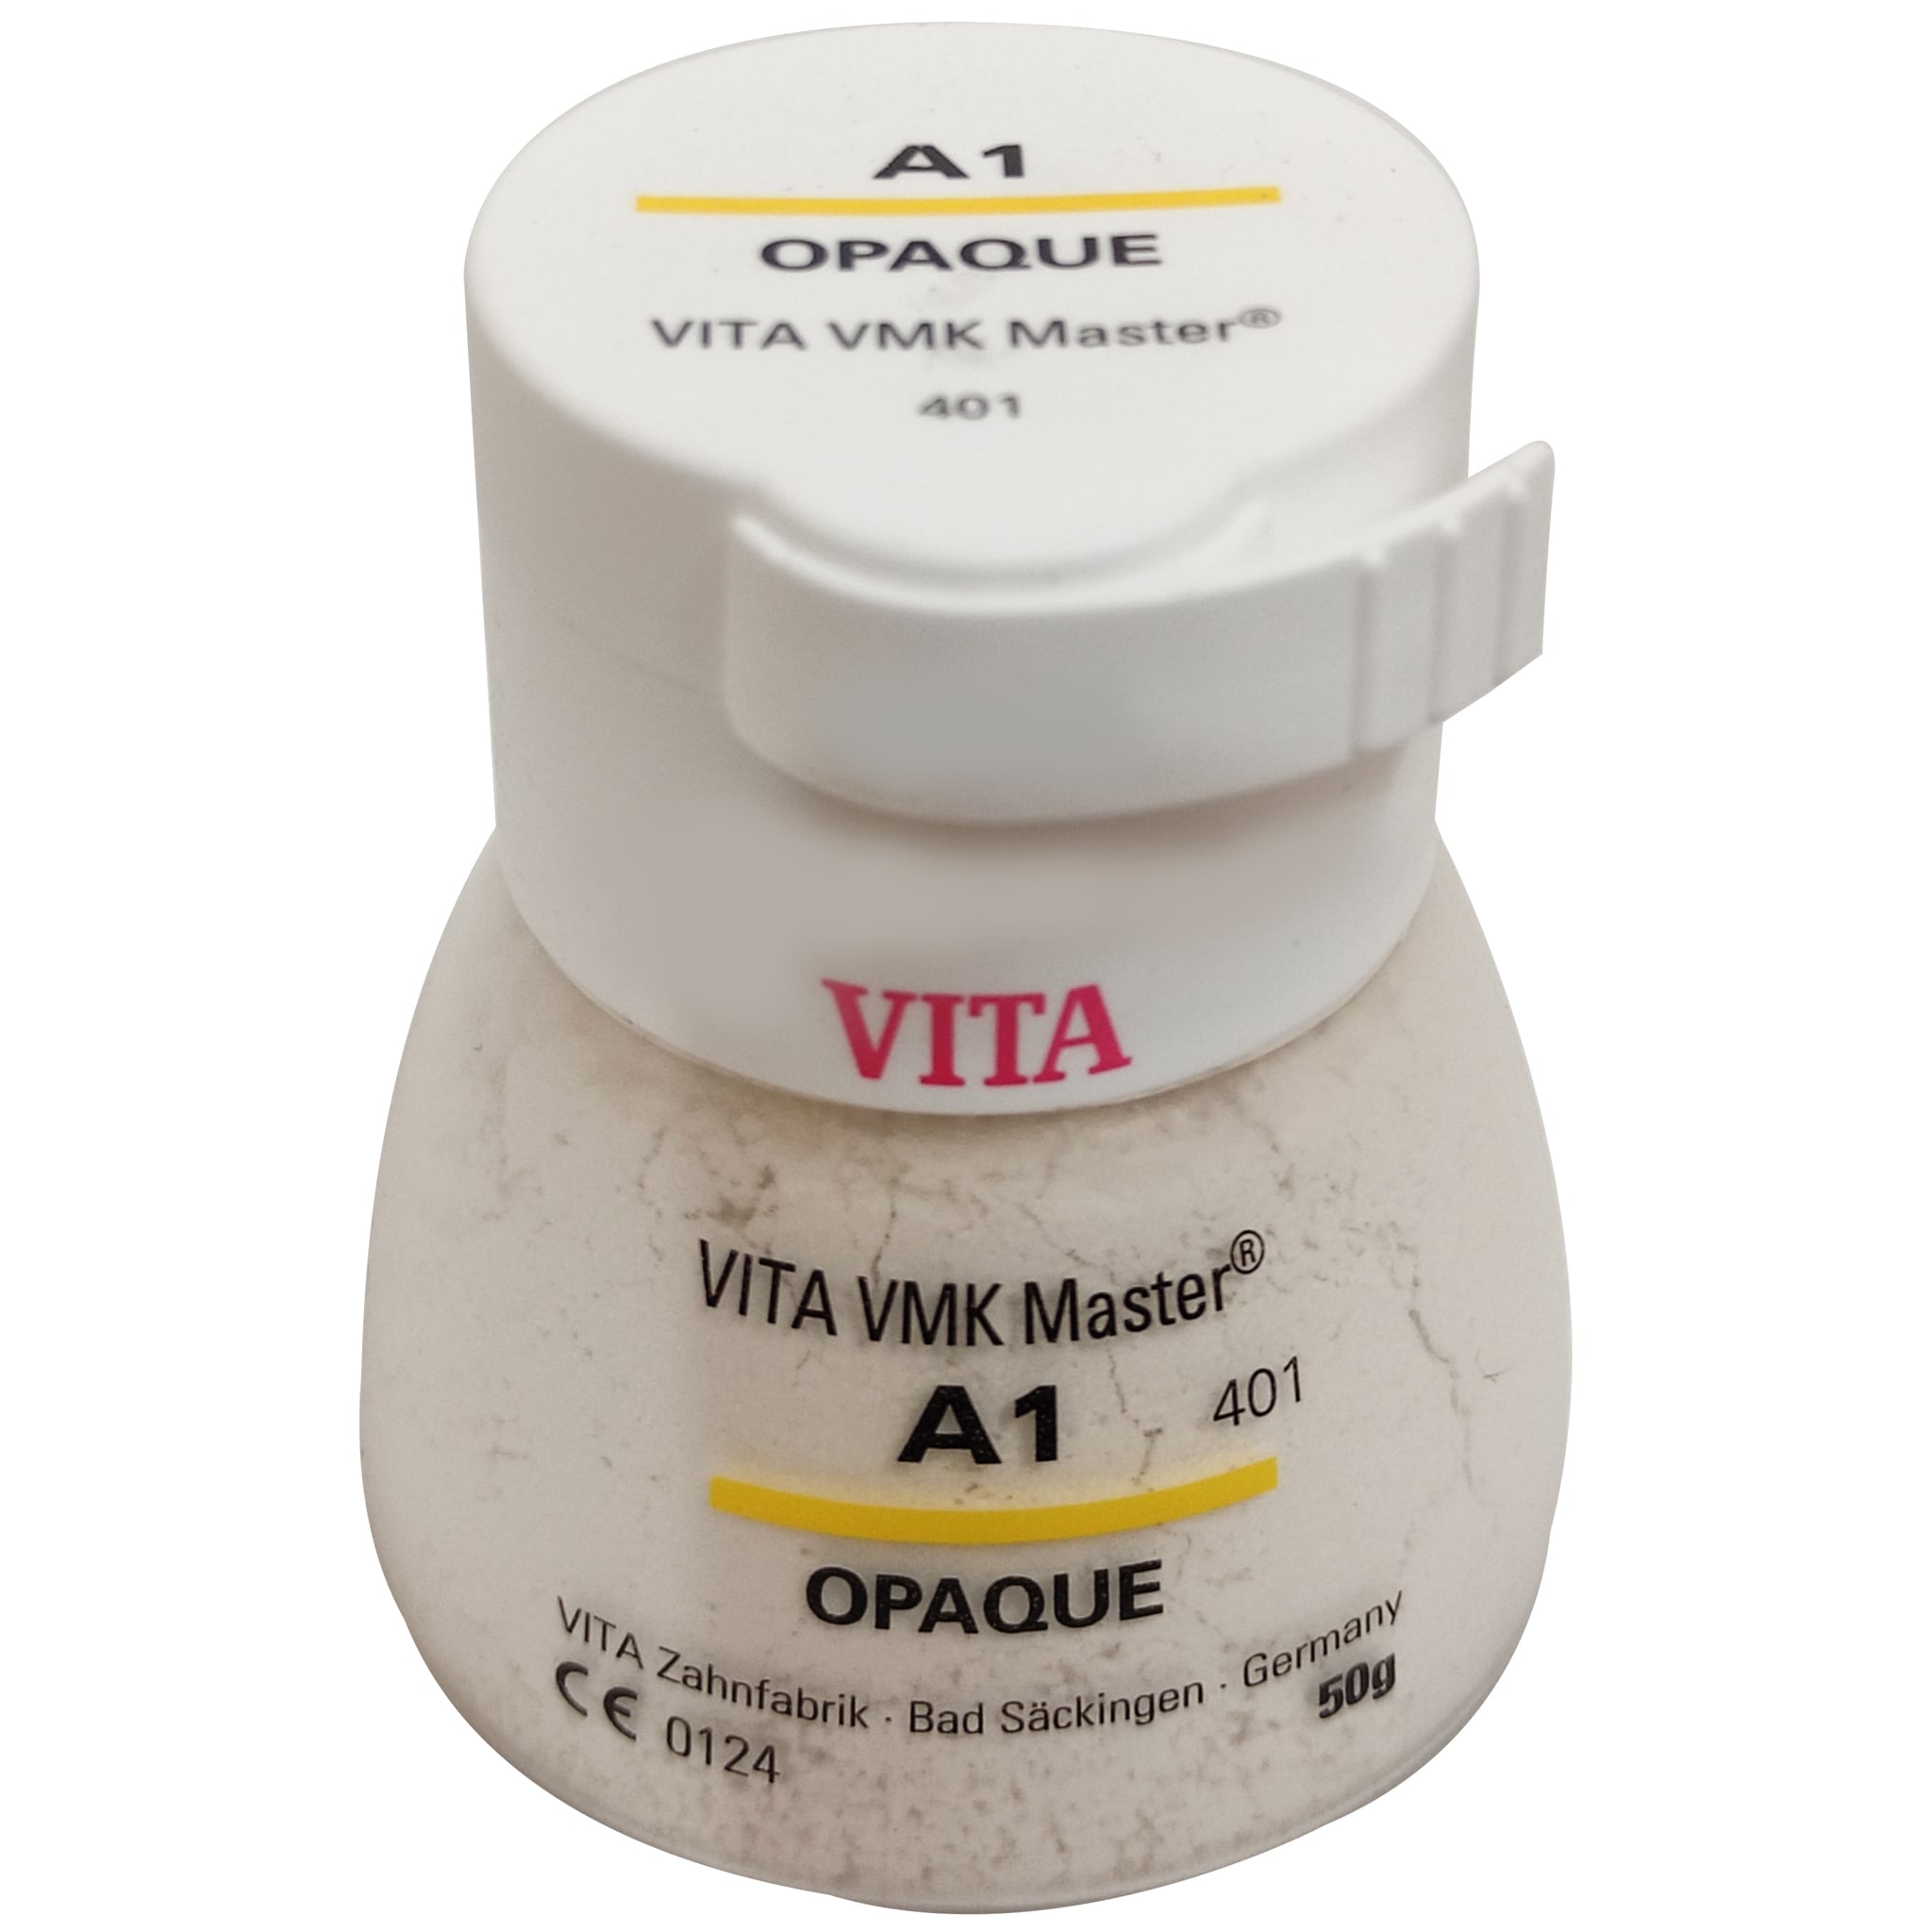 Vita VMK Master Opaque Classical Shades 50g